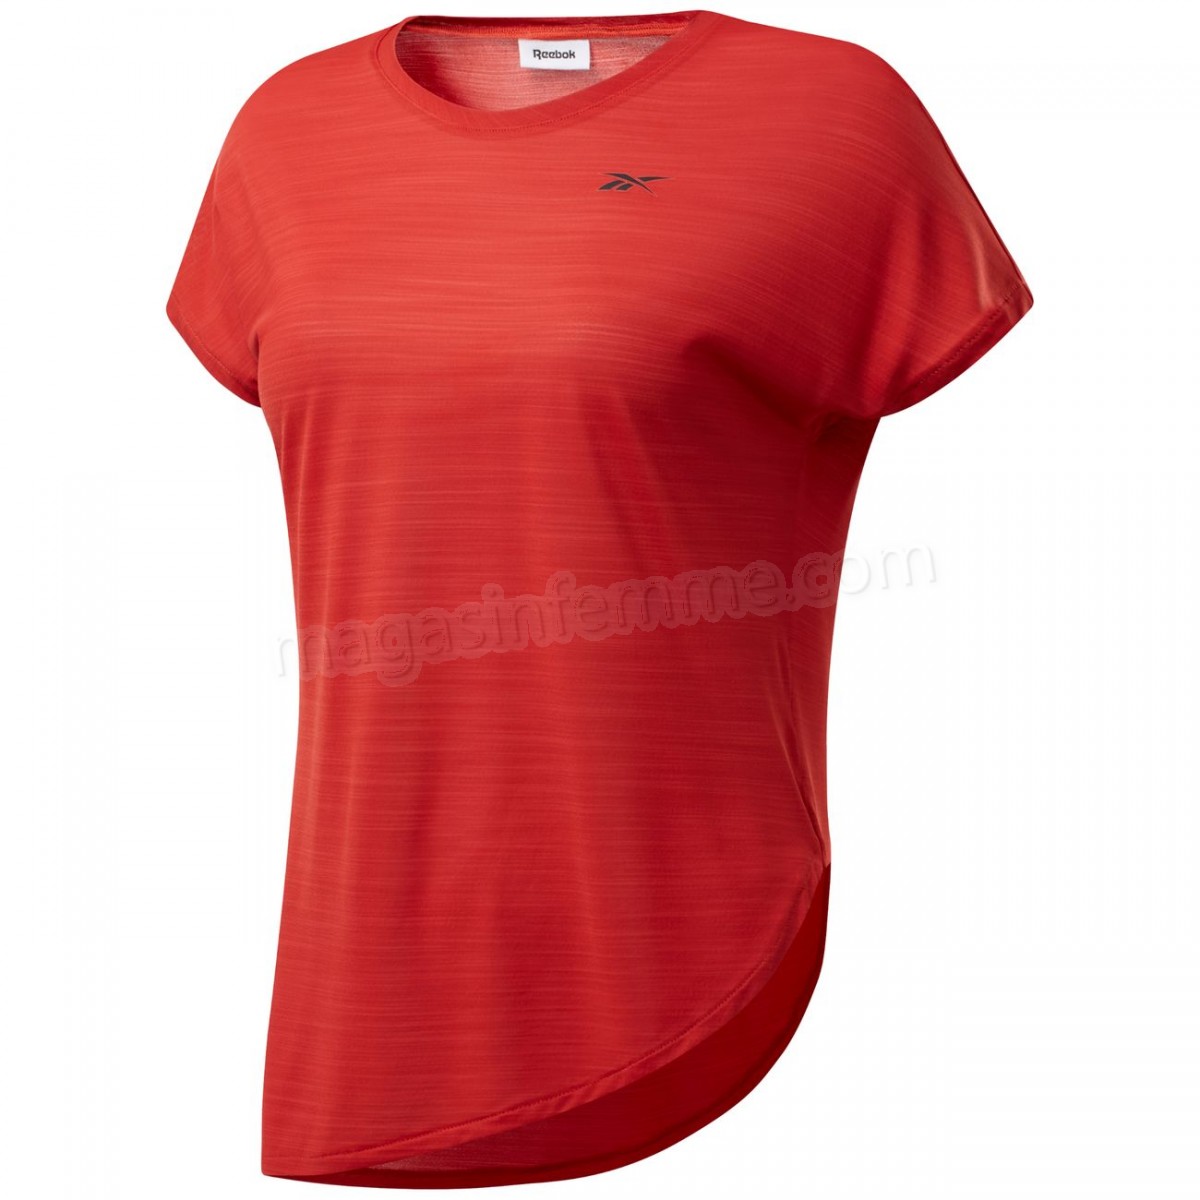 Reebok-Fitness femme REEBOK T-shirt femme Reebok Workout Ready ActivChill en solde - -0